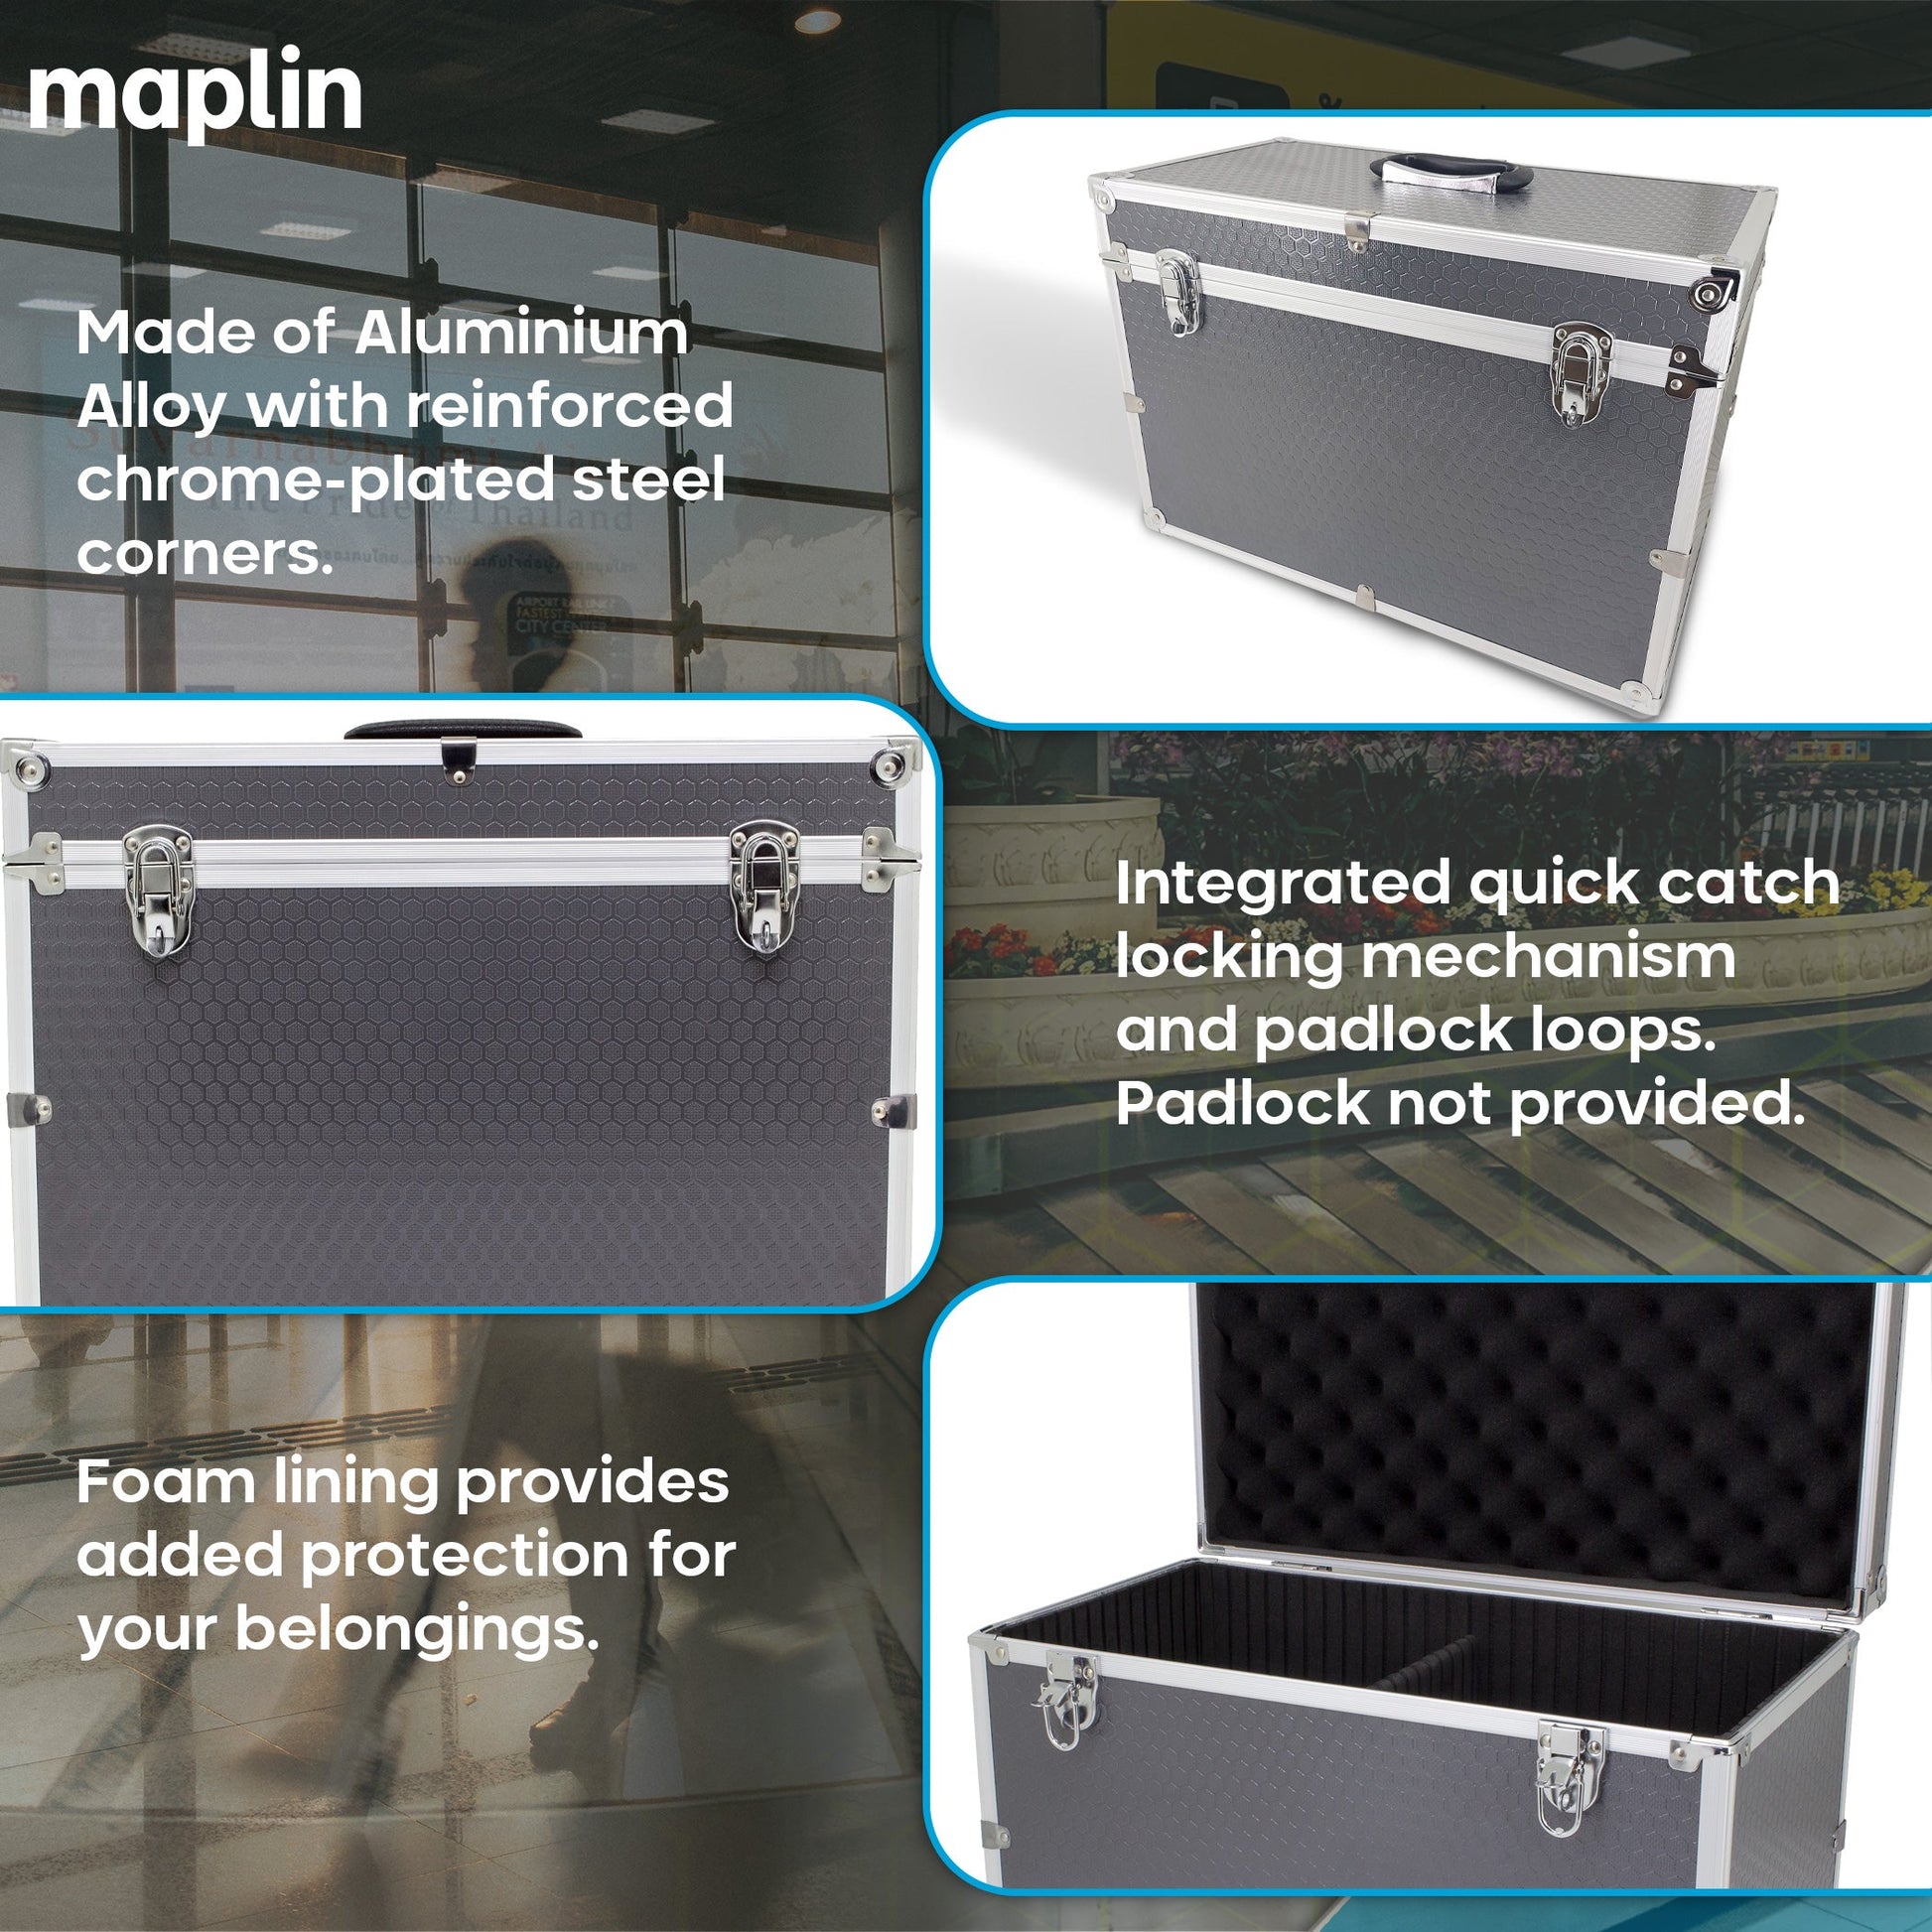 Maplin Plus Aluminium 190 x 570 x 380mm Flight Case - Black - maplin.co.uk